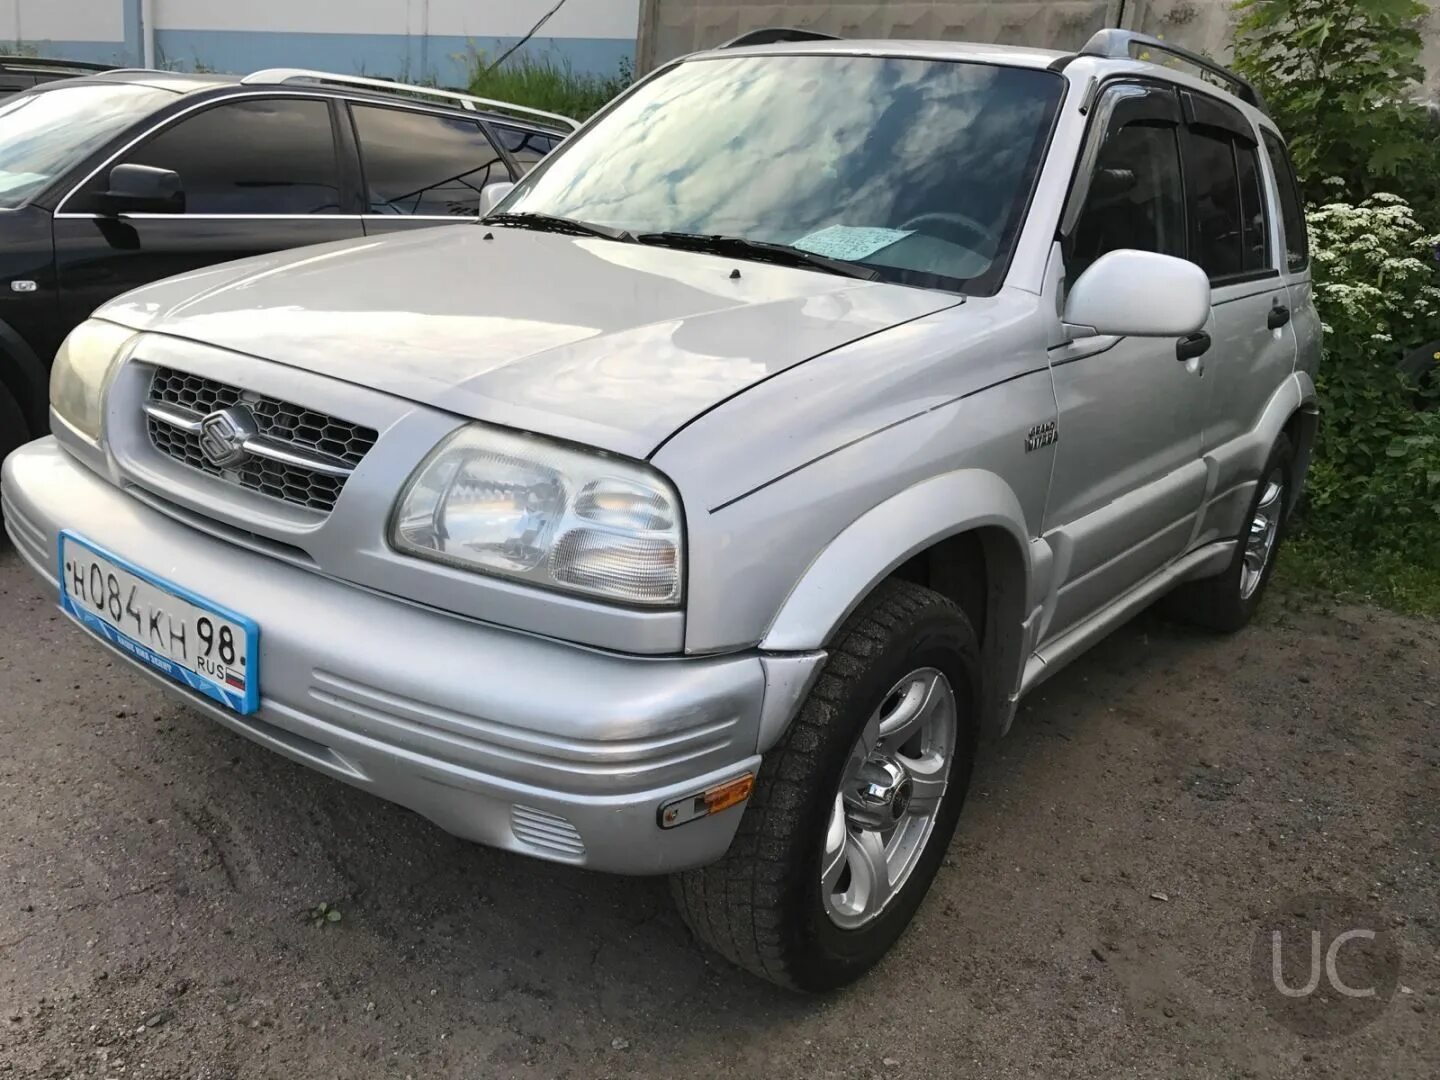 Vitara 2000. Suzuki Grand Vitara 2000. Suzuki Grand Vitara 2000 года. Гранд Витара 2000 года. Судзуки Гранд Витара 2000.